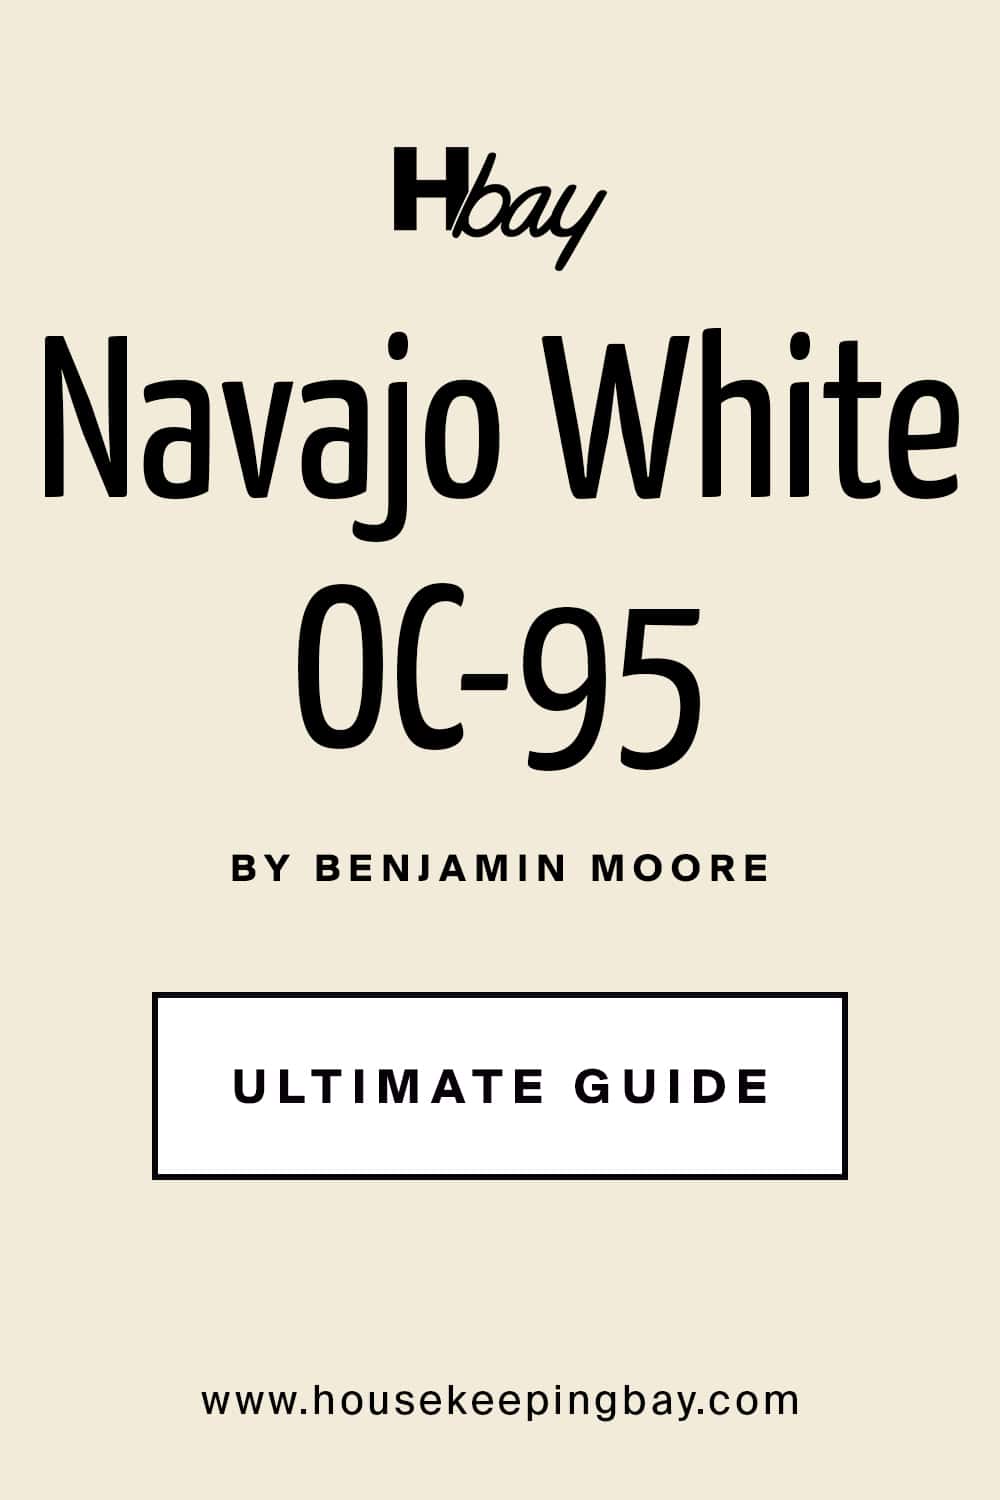 Navajo White OC-95 by Benjamin Moore Ultimate Guide